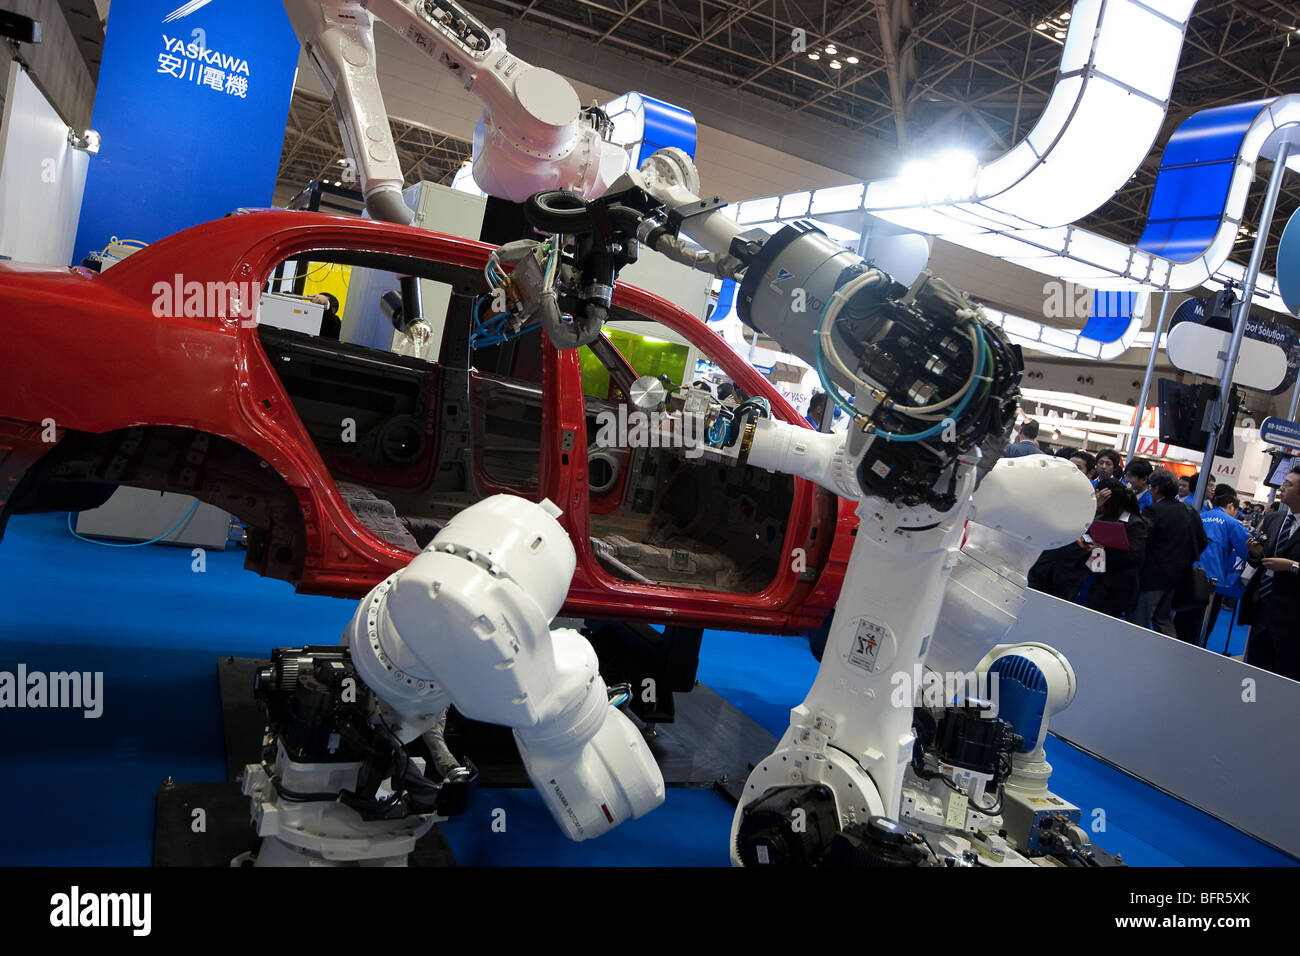 Yaskawa robot per industria automobilistica in mostra al robot fair exhibition, Tokyo, Giappone. Foto Stock